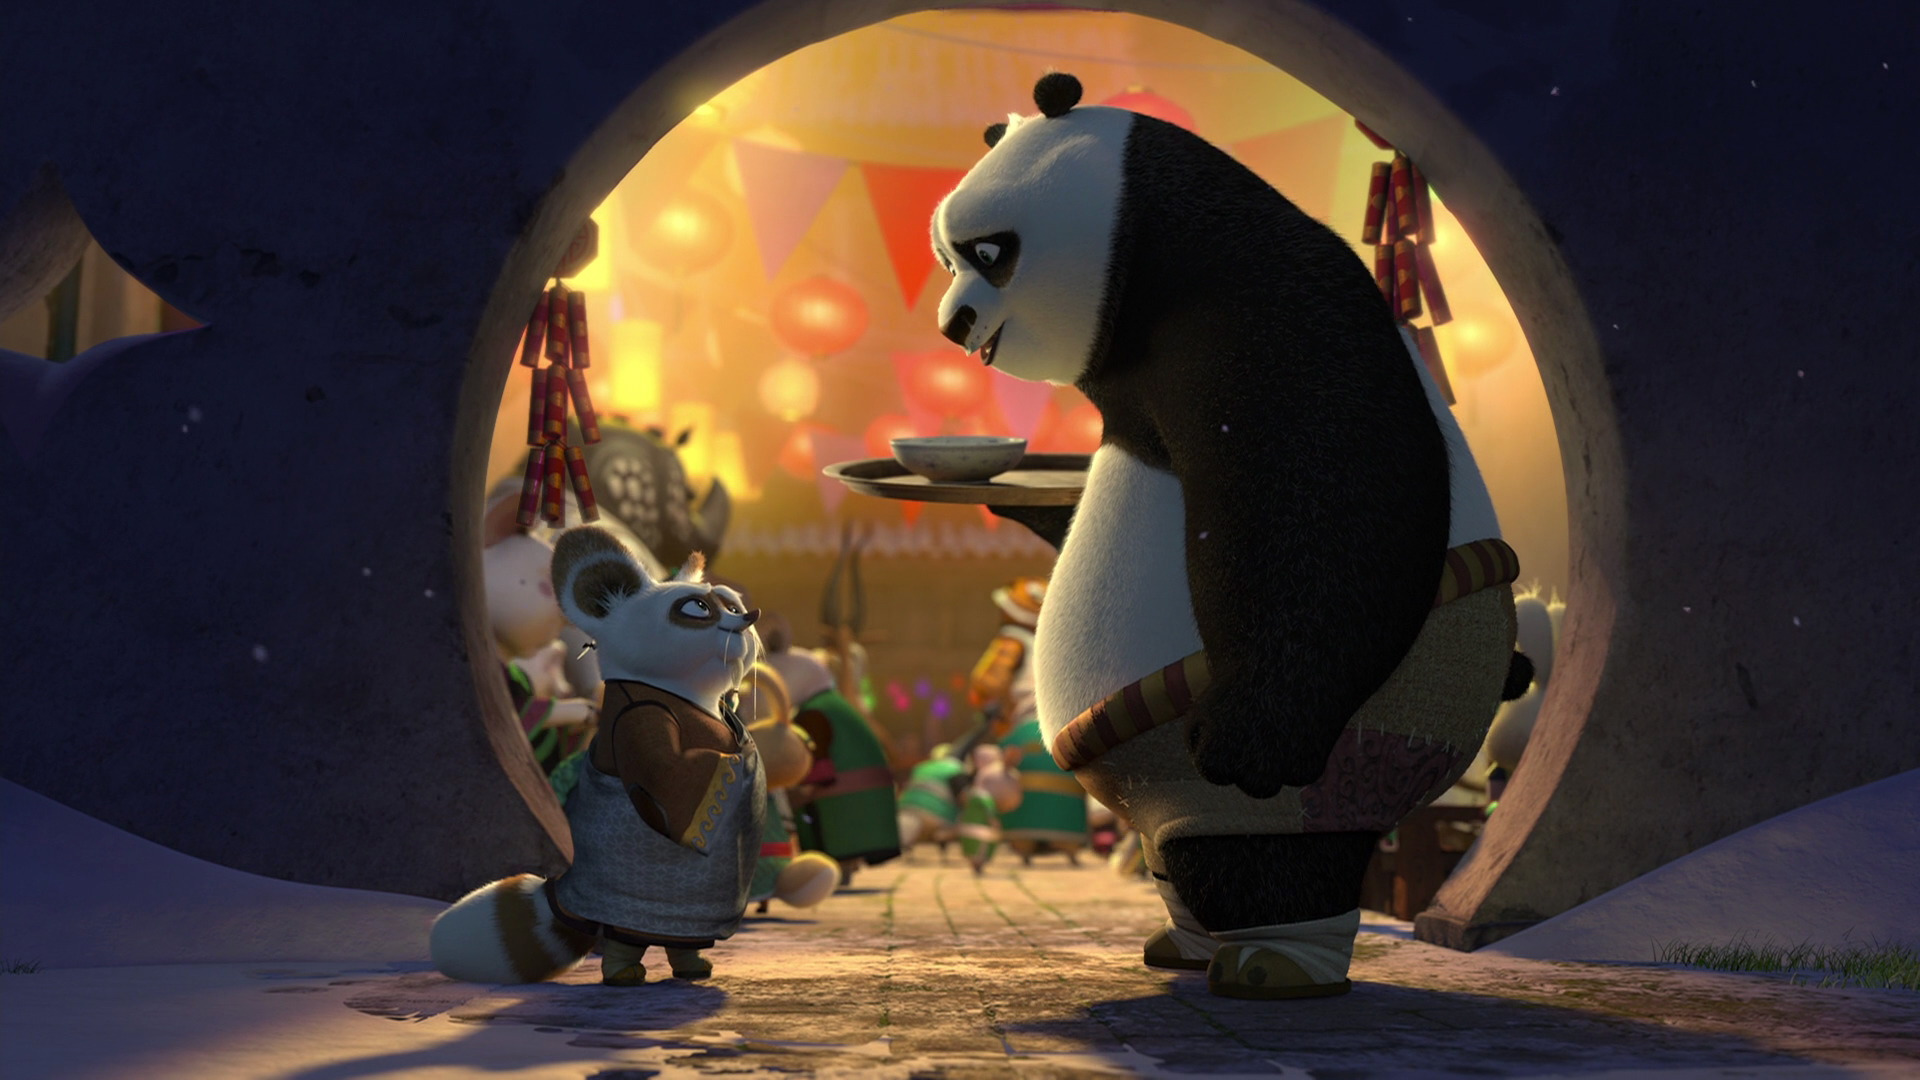 Watch Kung Fu Panda Holiday